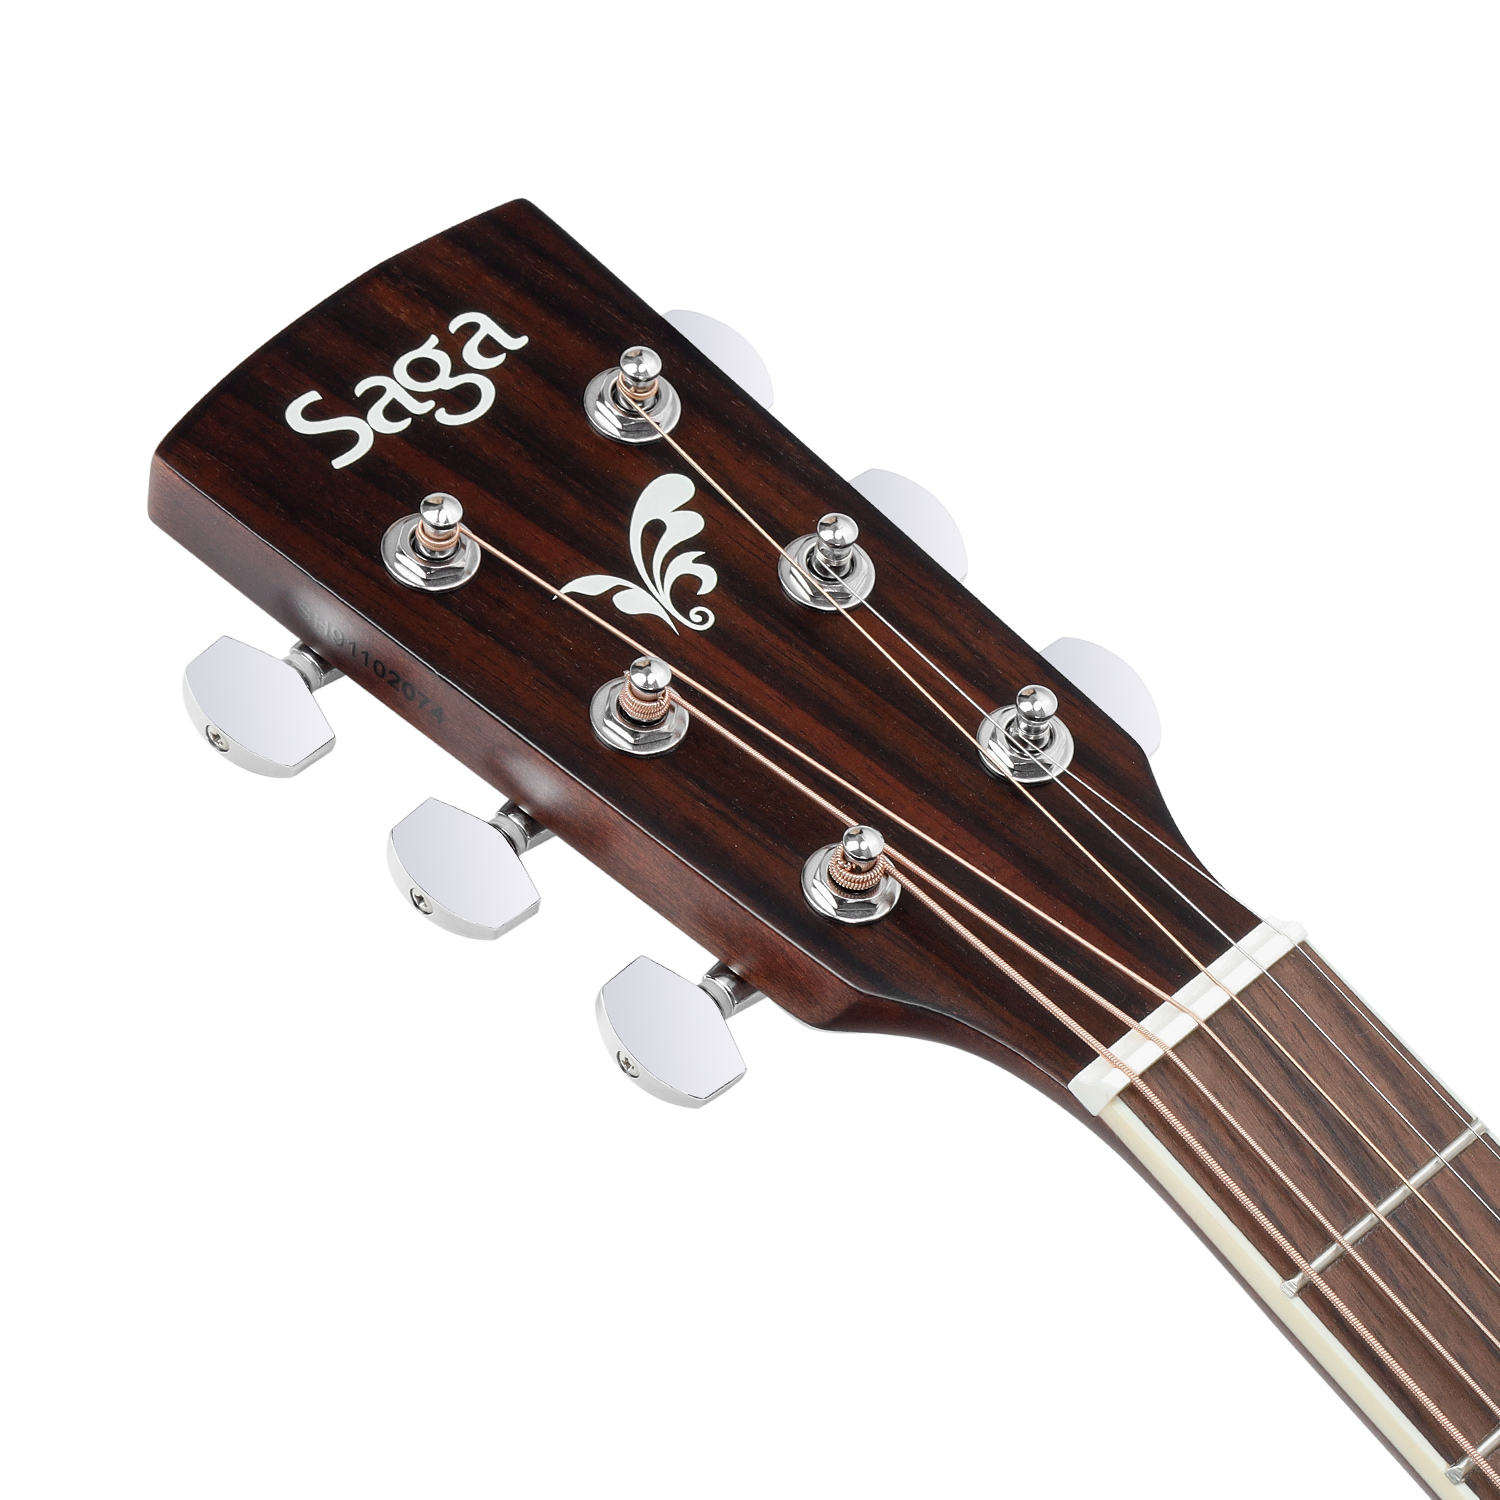 Guitar Acoustic Saga SA700C